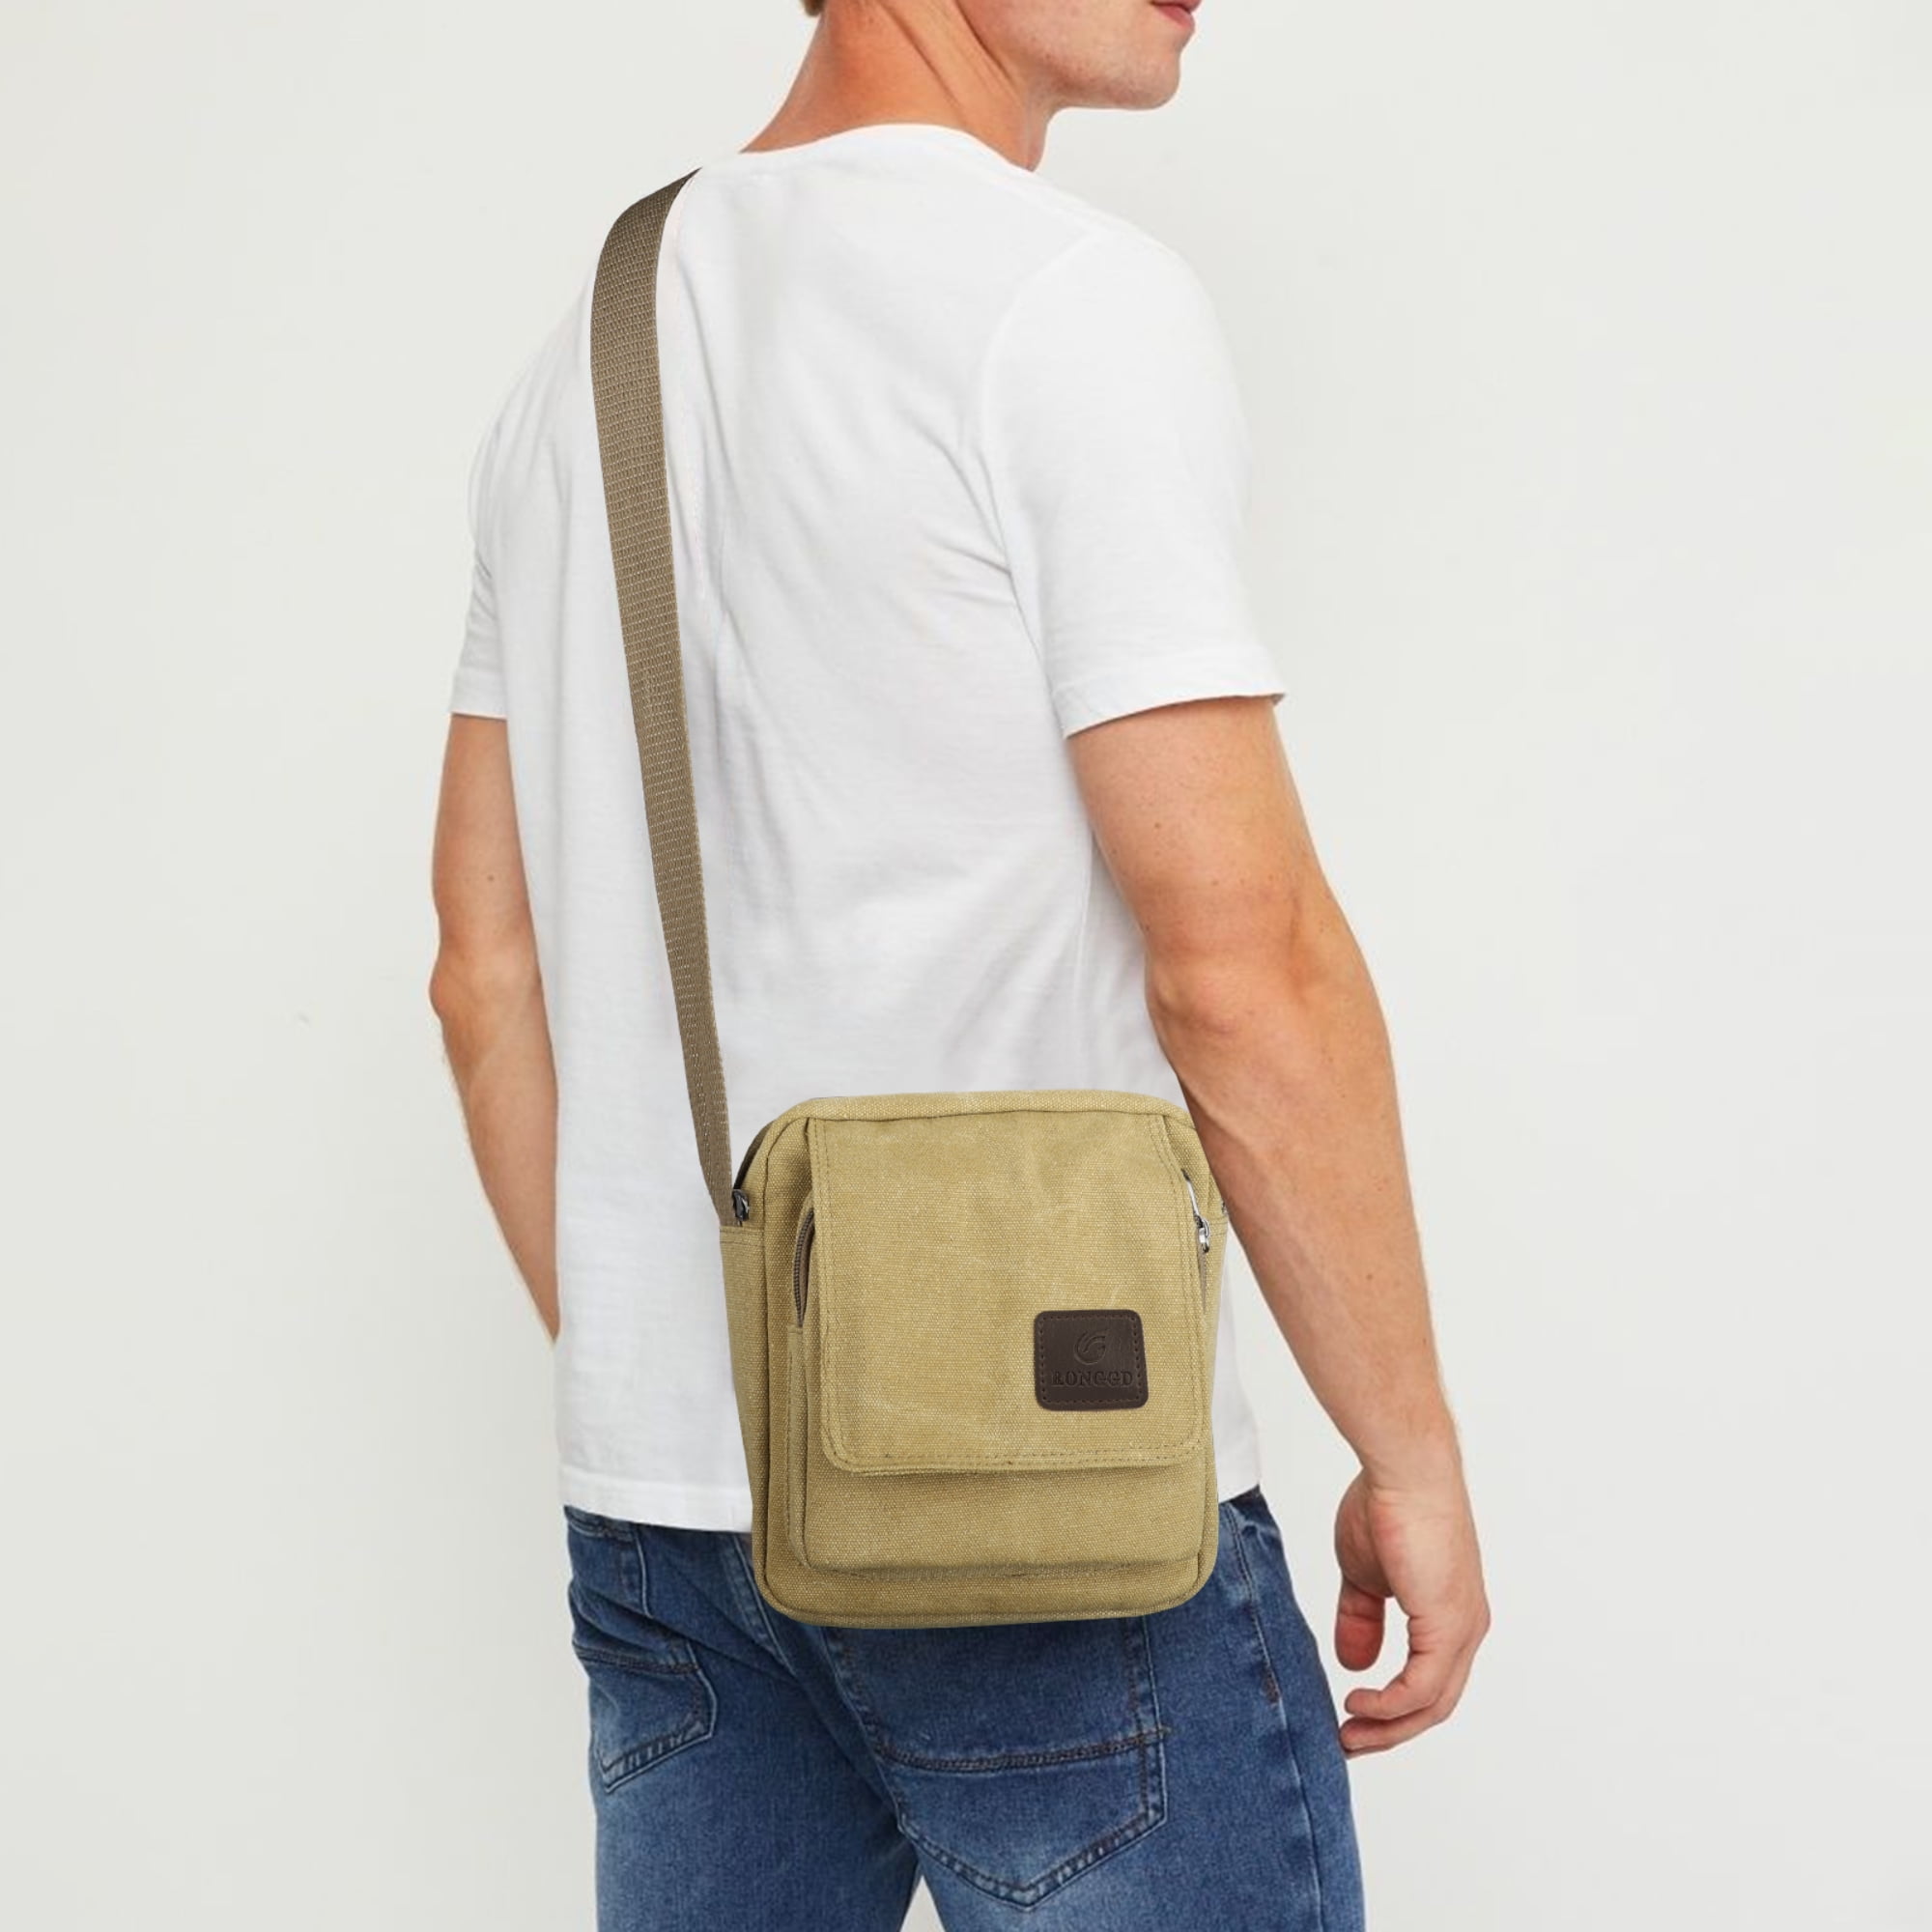 Men's Canvas Shoulder Bag, EEEkit Small Vintage Crossbody Bag with  Adjustable Strap for Work, Business, Travel, Khaki